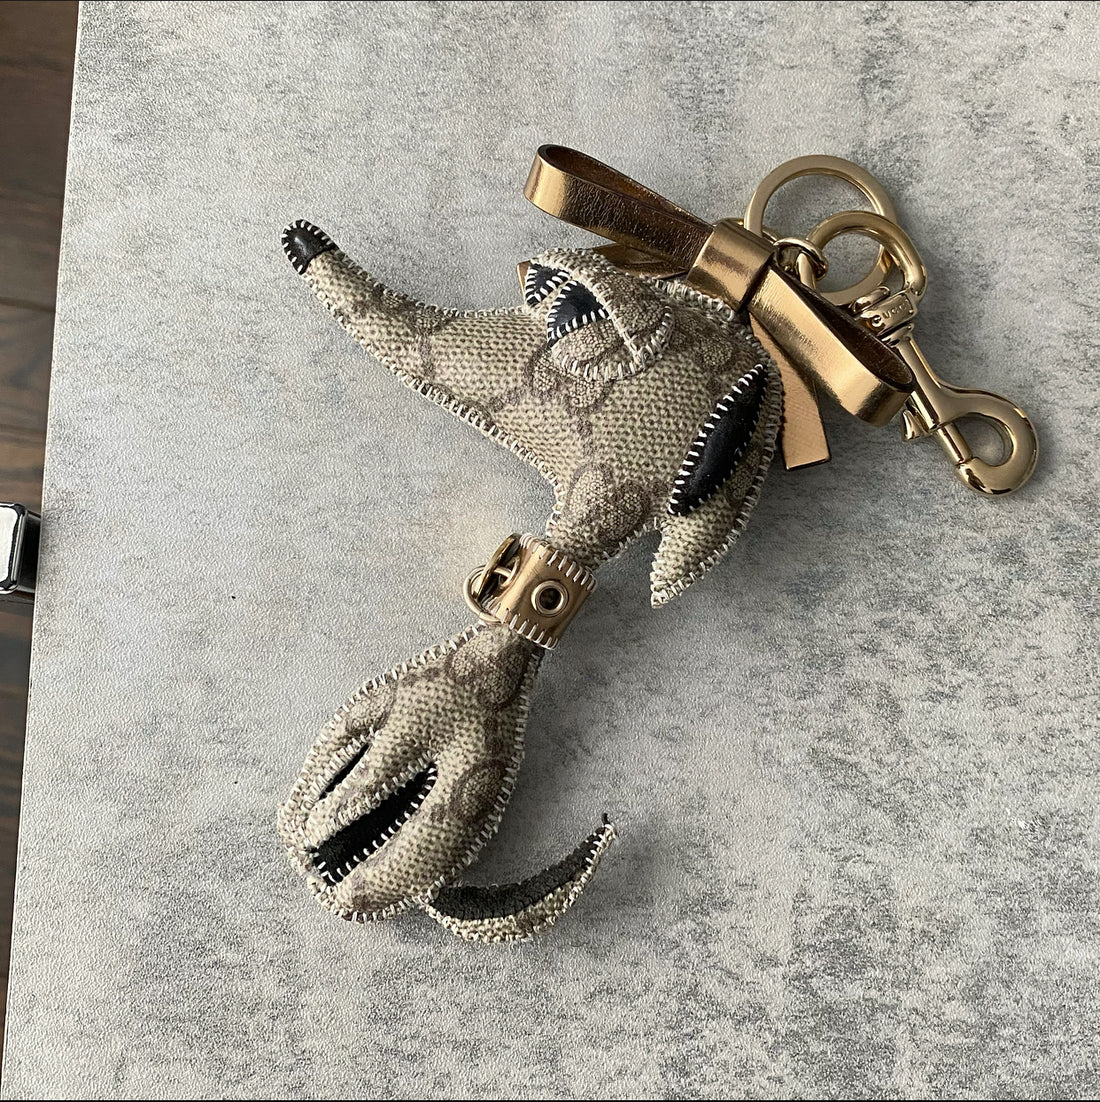 Preowned Authentic Louis Vuitton Monogram Dog Bag Charm Key Holder